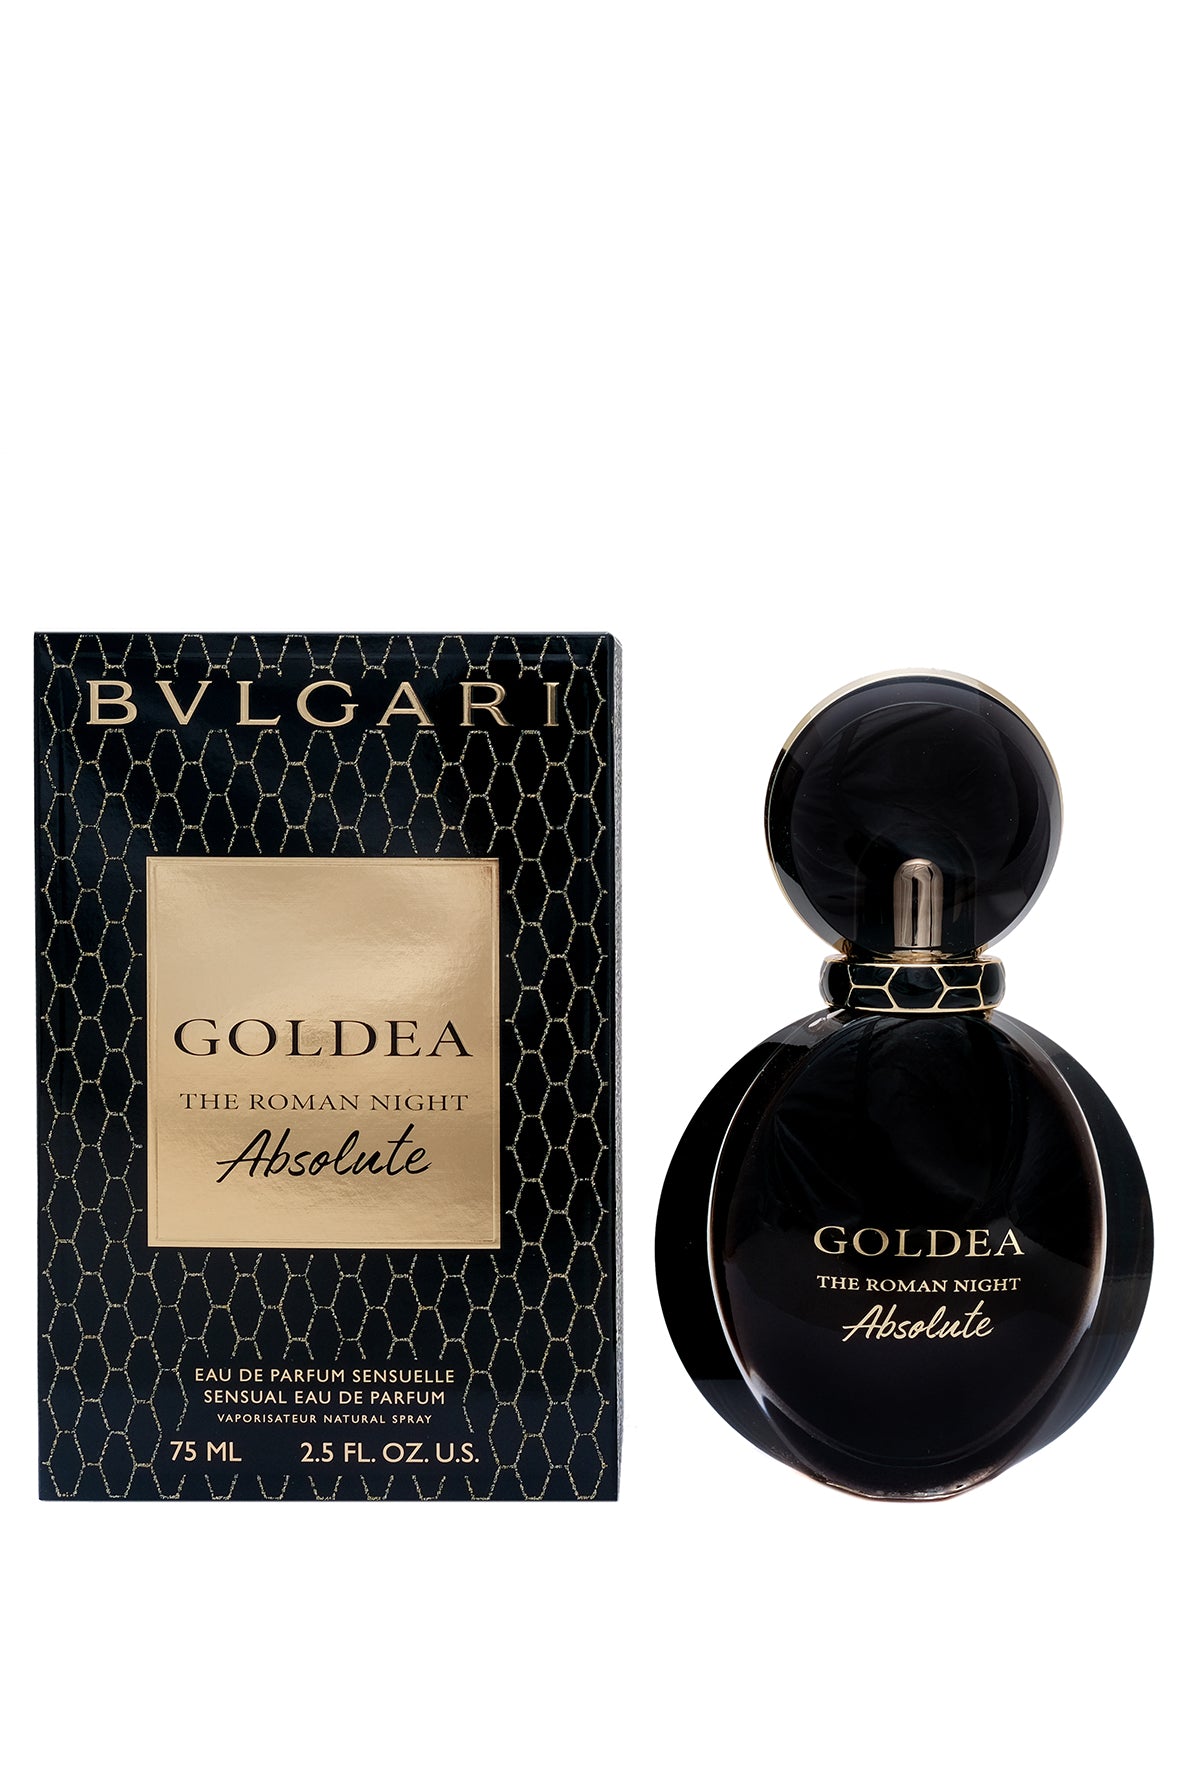 Bulgari Goldea The Roman Night Absolute Sensuelle Eau De Parfum 75ML